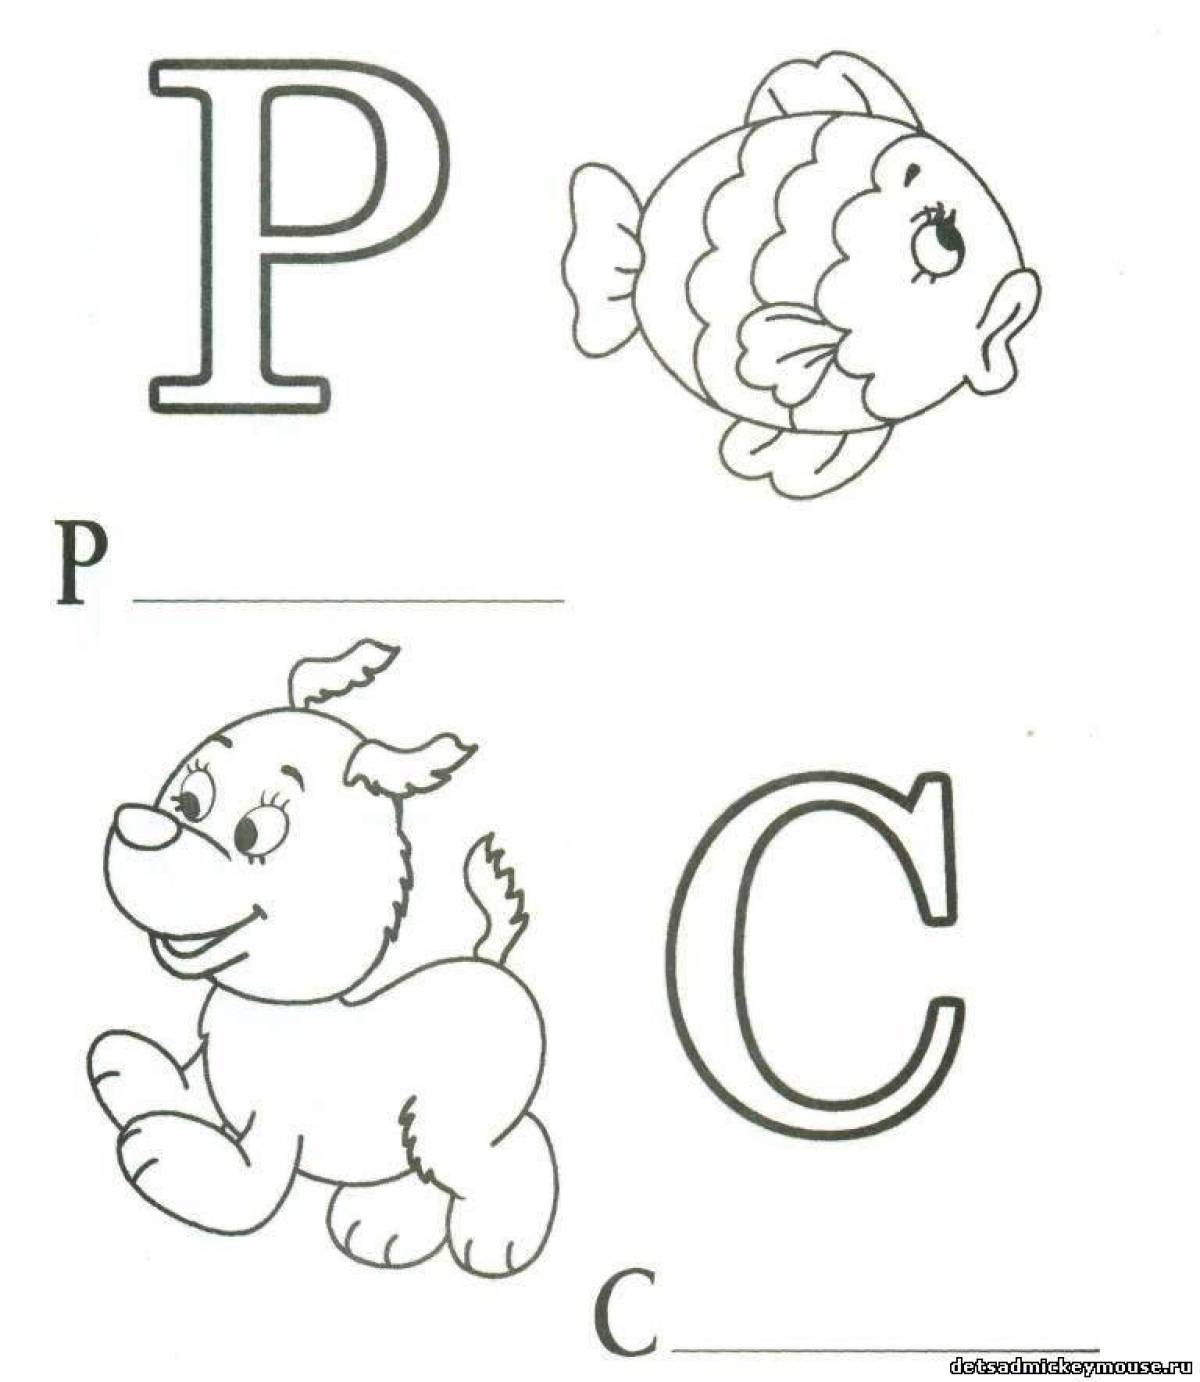 Exquisite alphabet letter coloring book